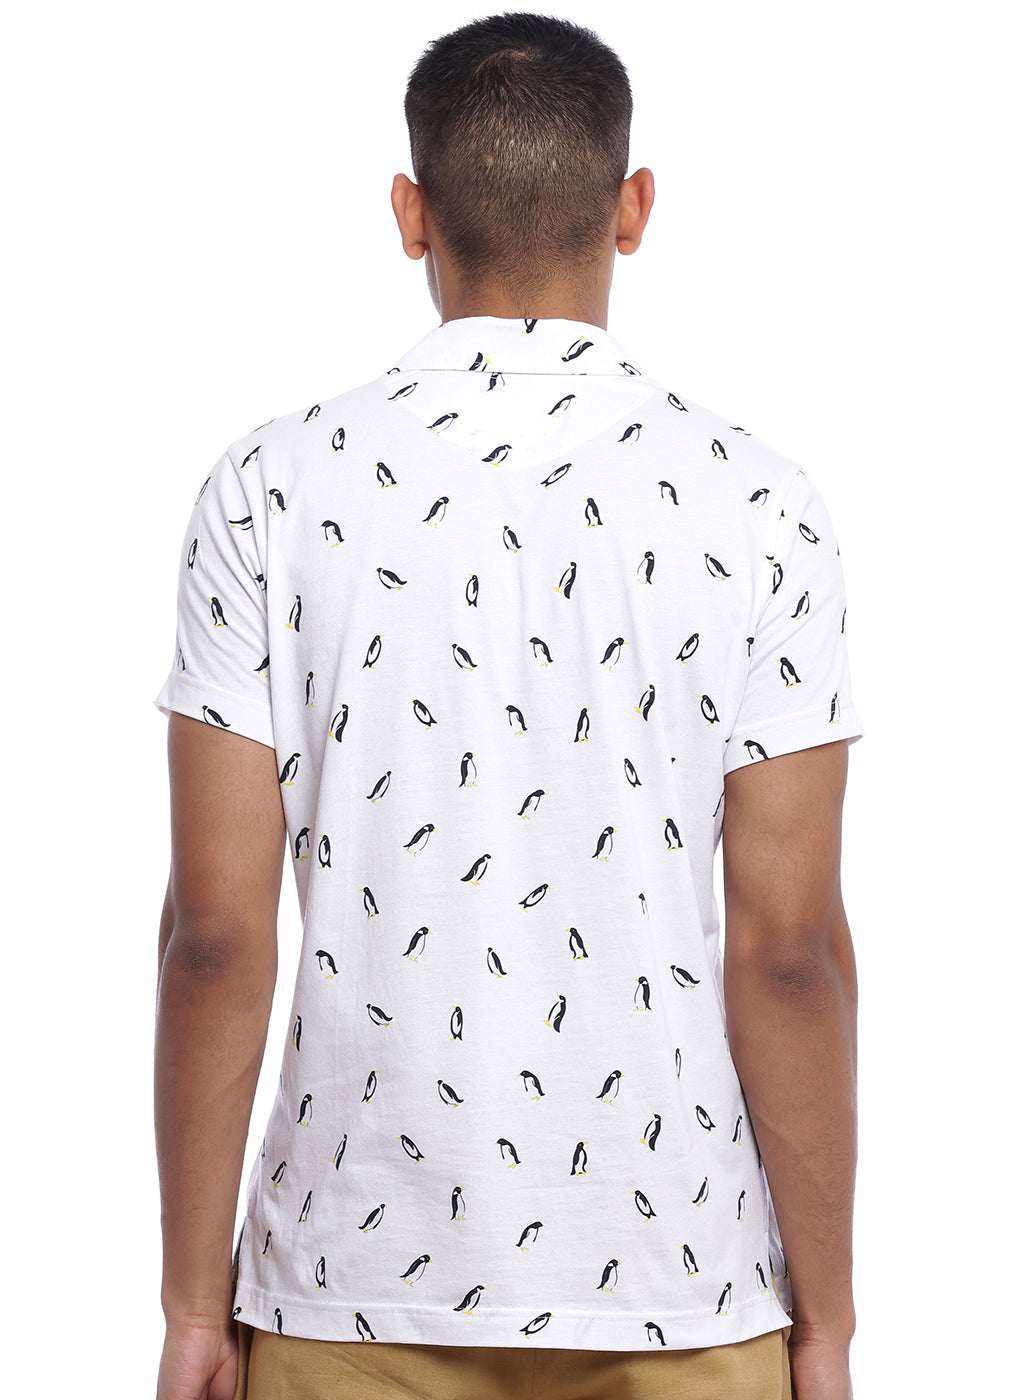 Penguin Print T-shirt - Genes online store 2020